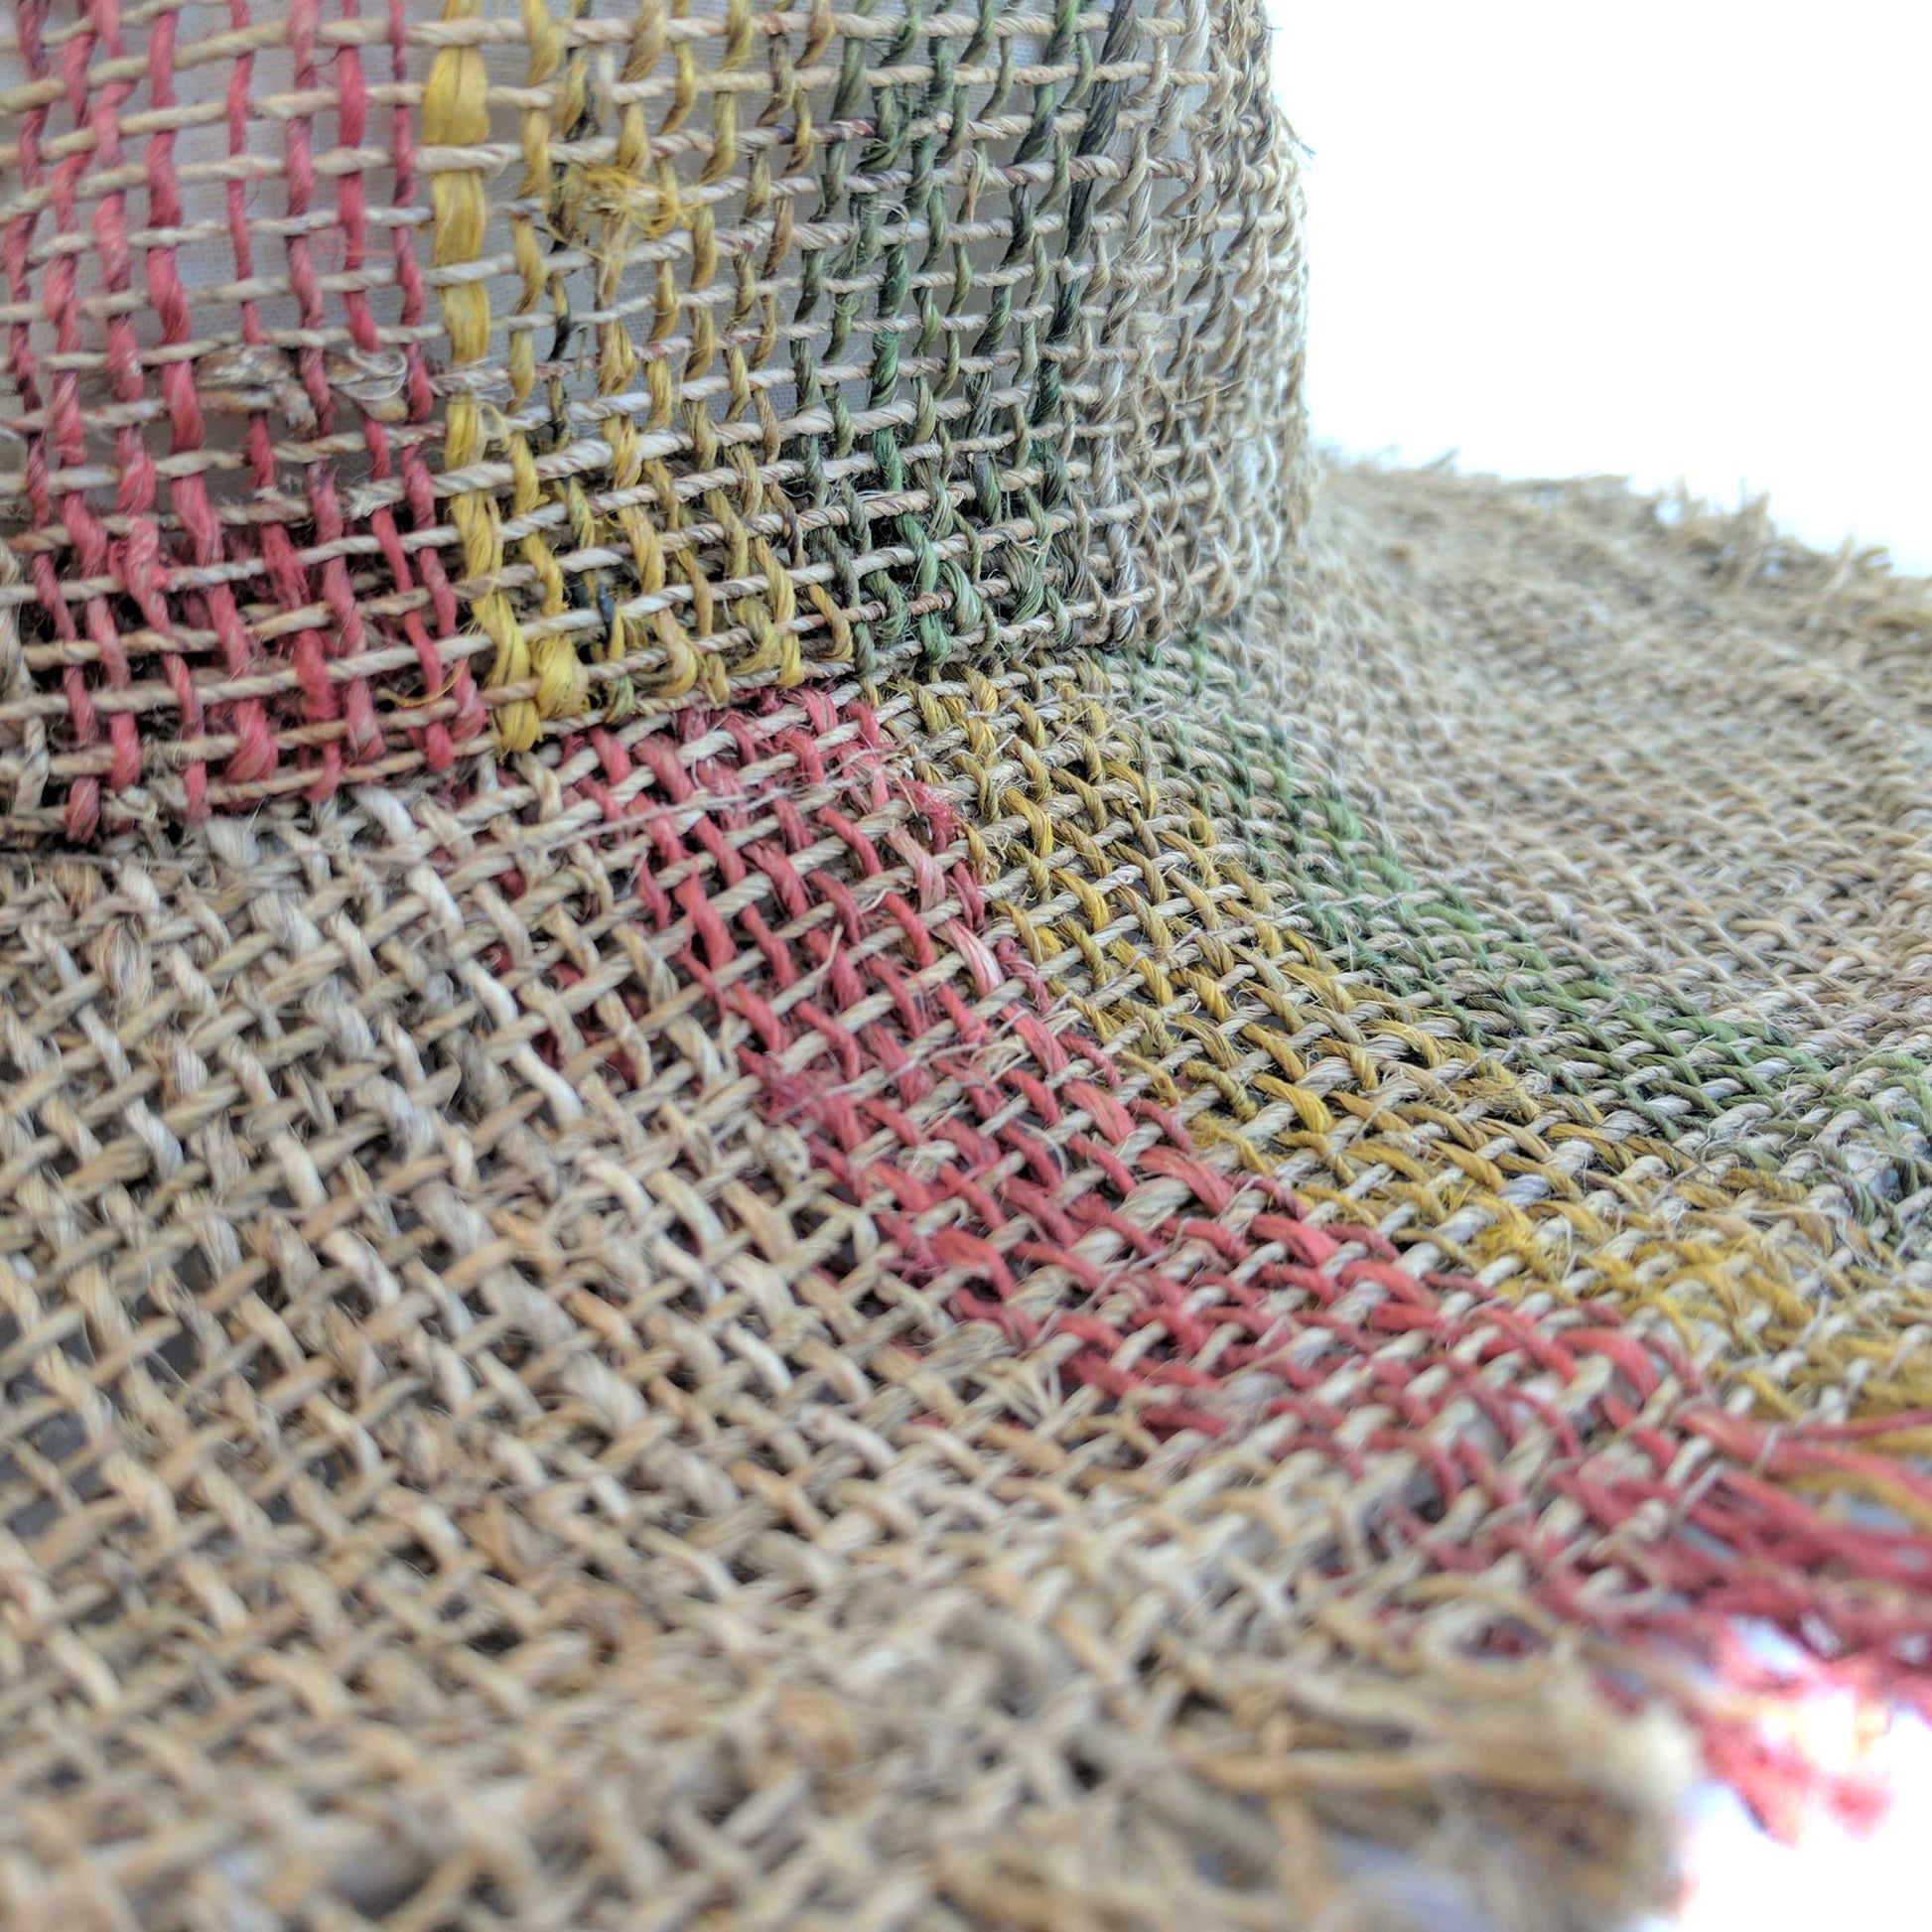 HEMP Hats made from 100% natural, organic and eco-friendly handwoven HEMP